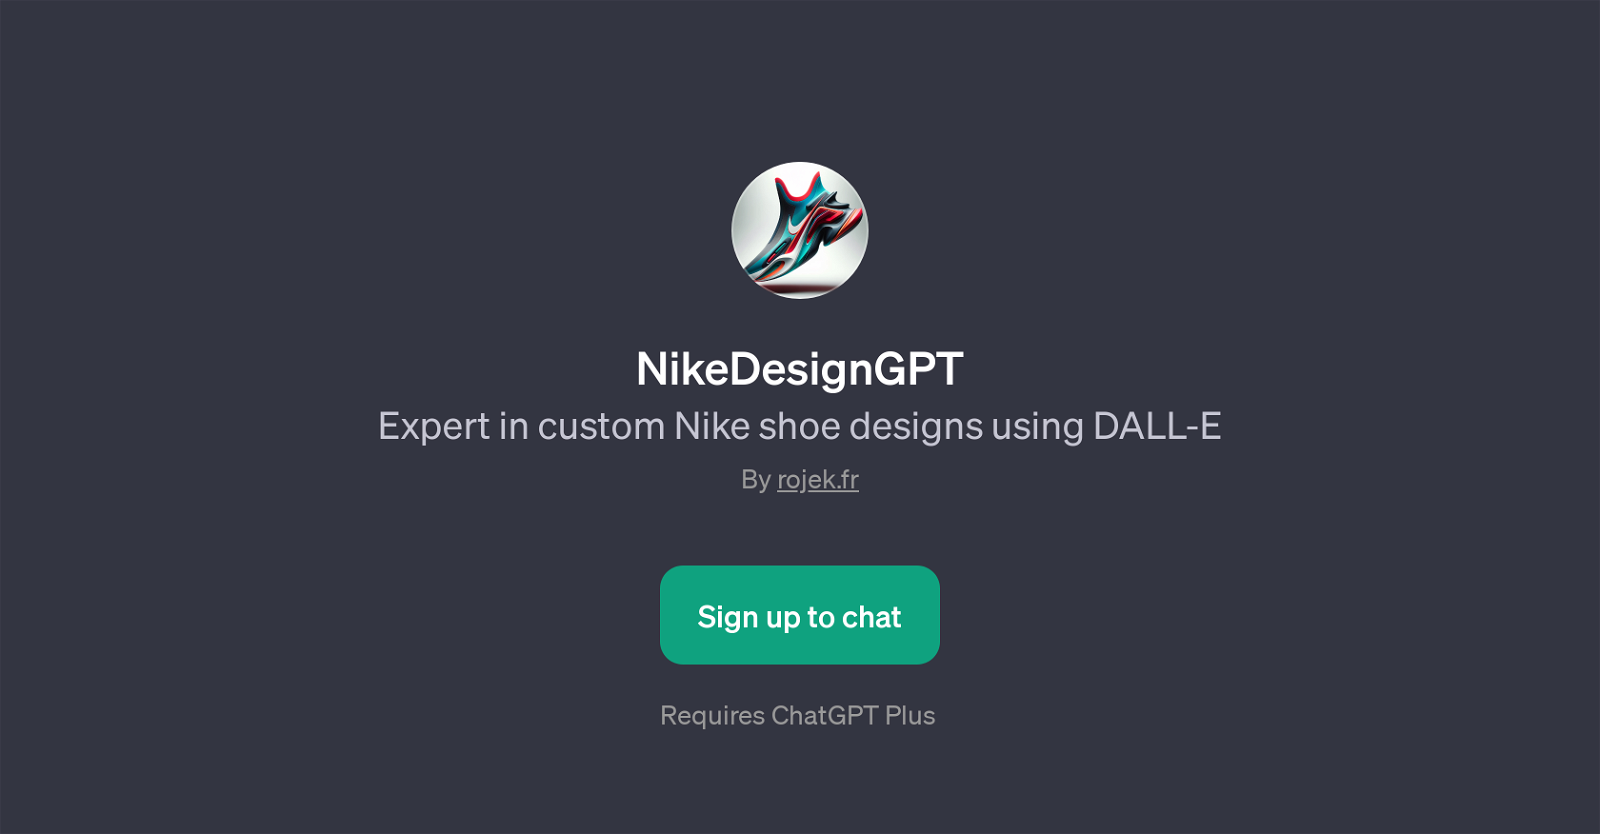 NikeDesignGPT website